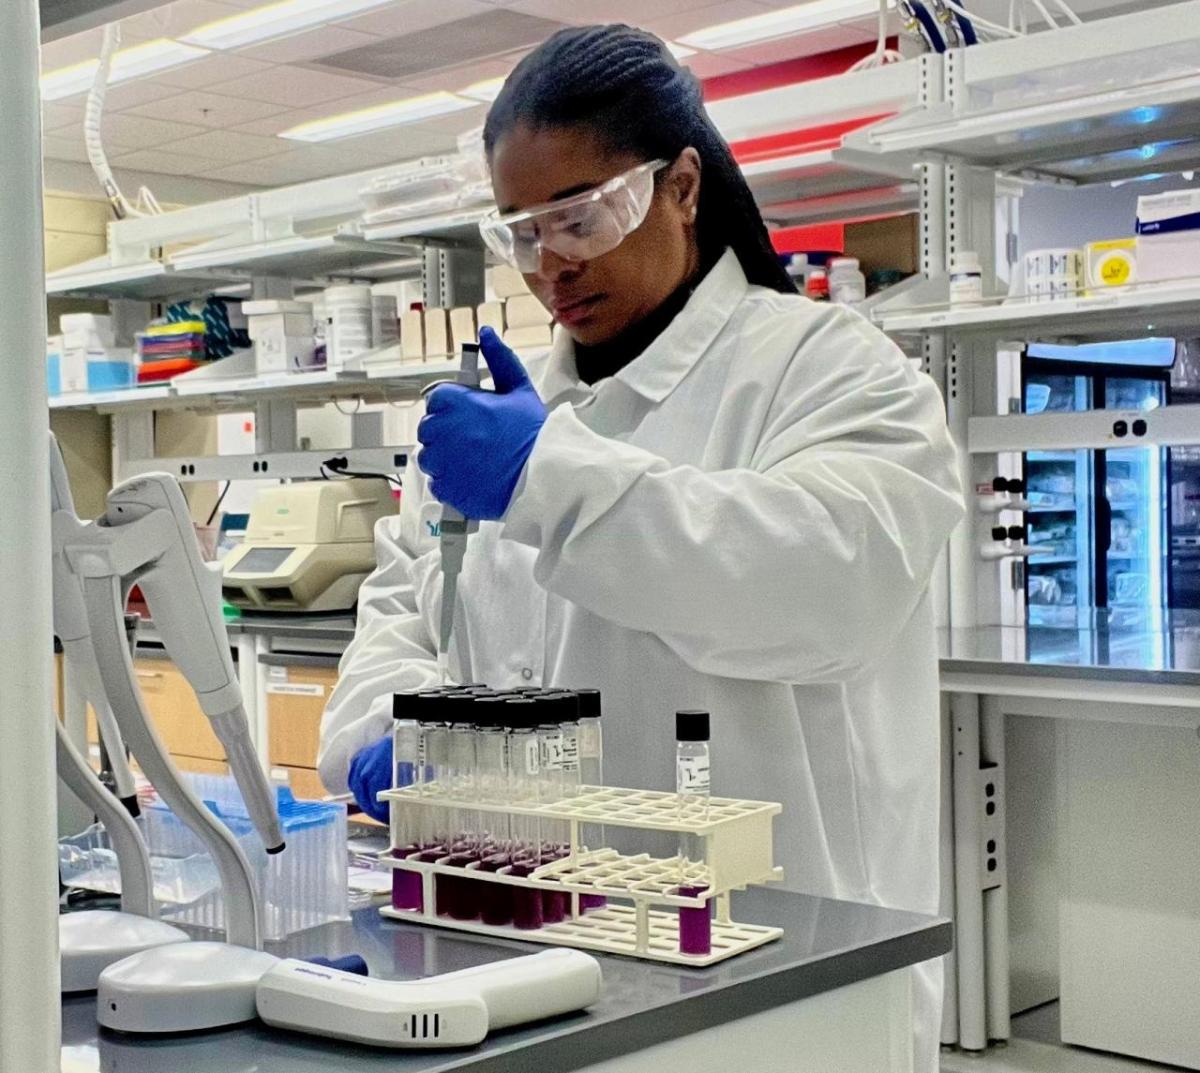 Scientist Bernice Karlton-Senaye, Ph.D. adds liquid to test tubes in a laboratory